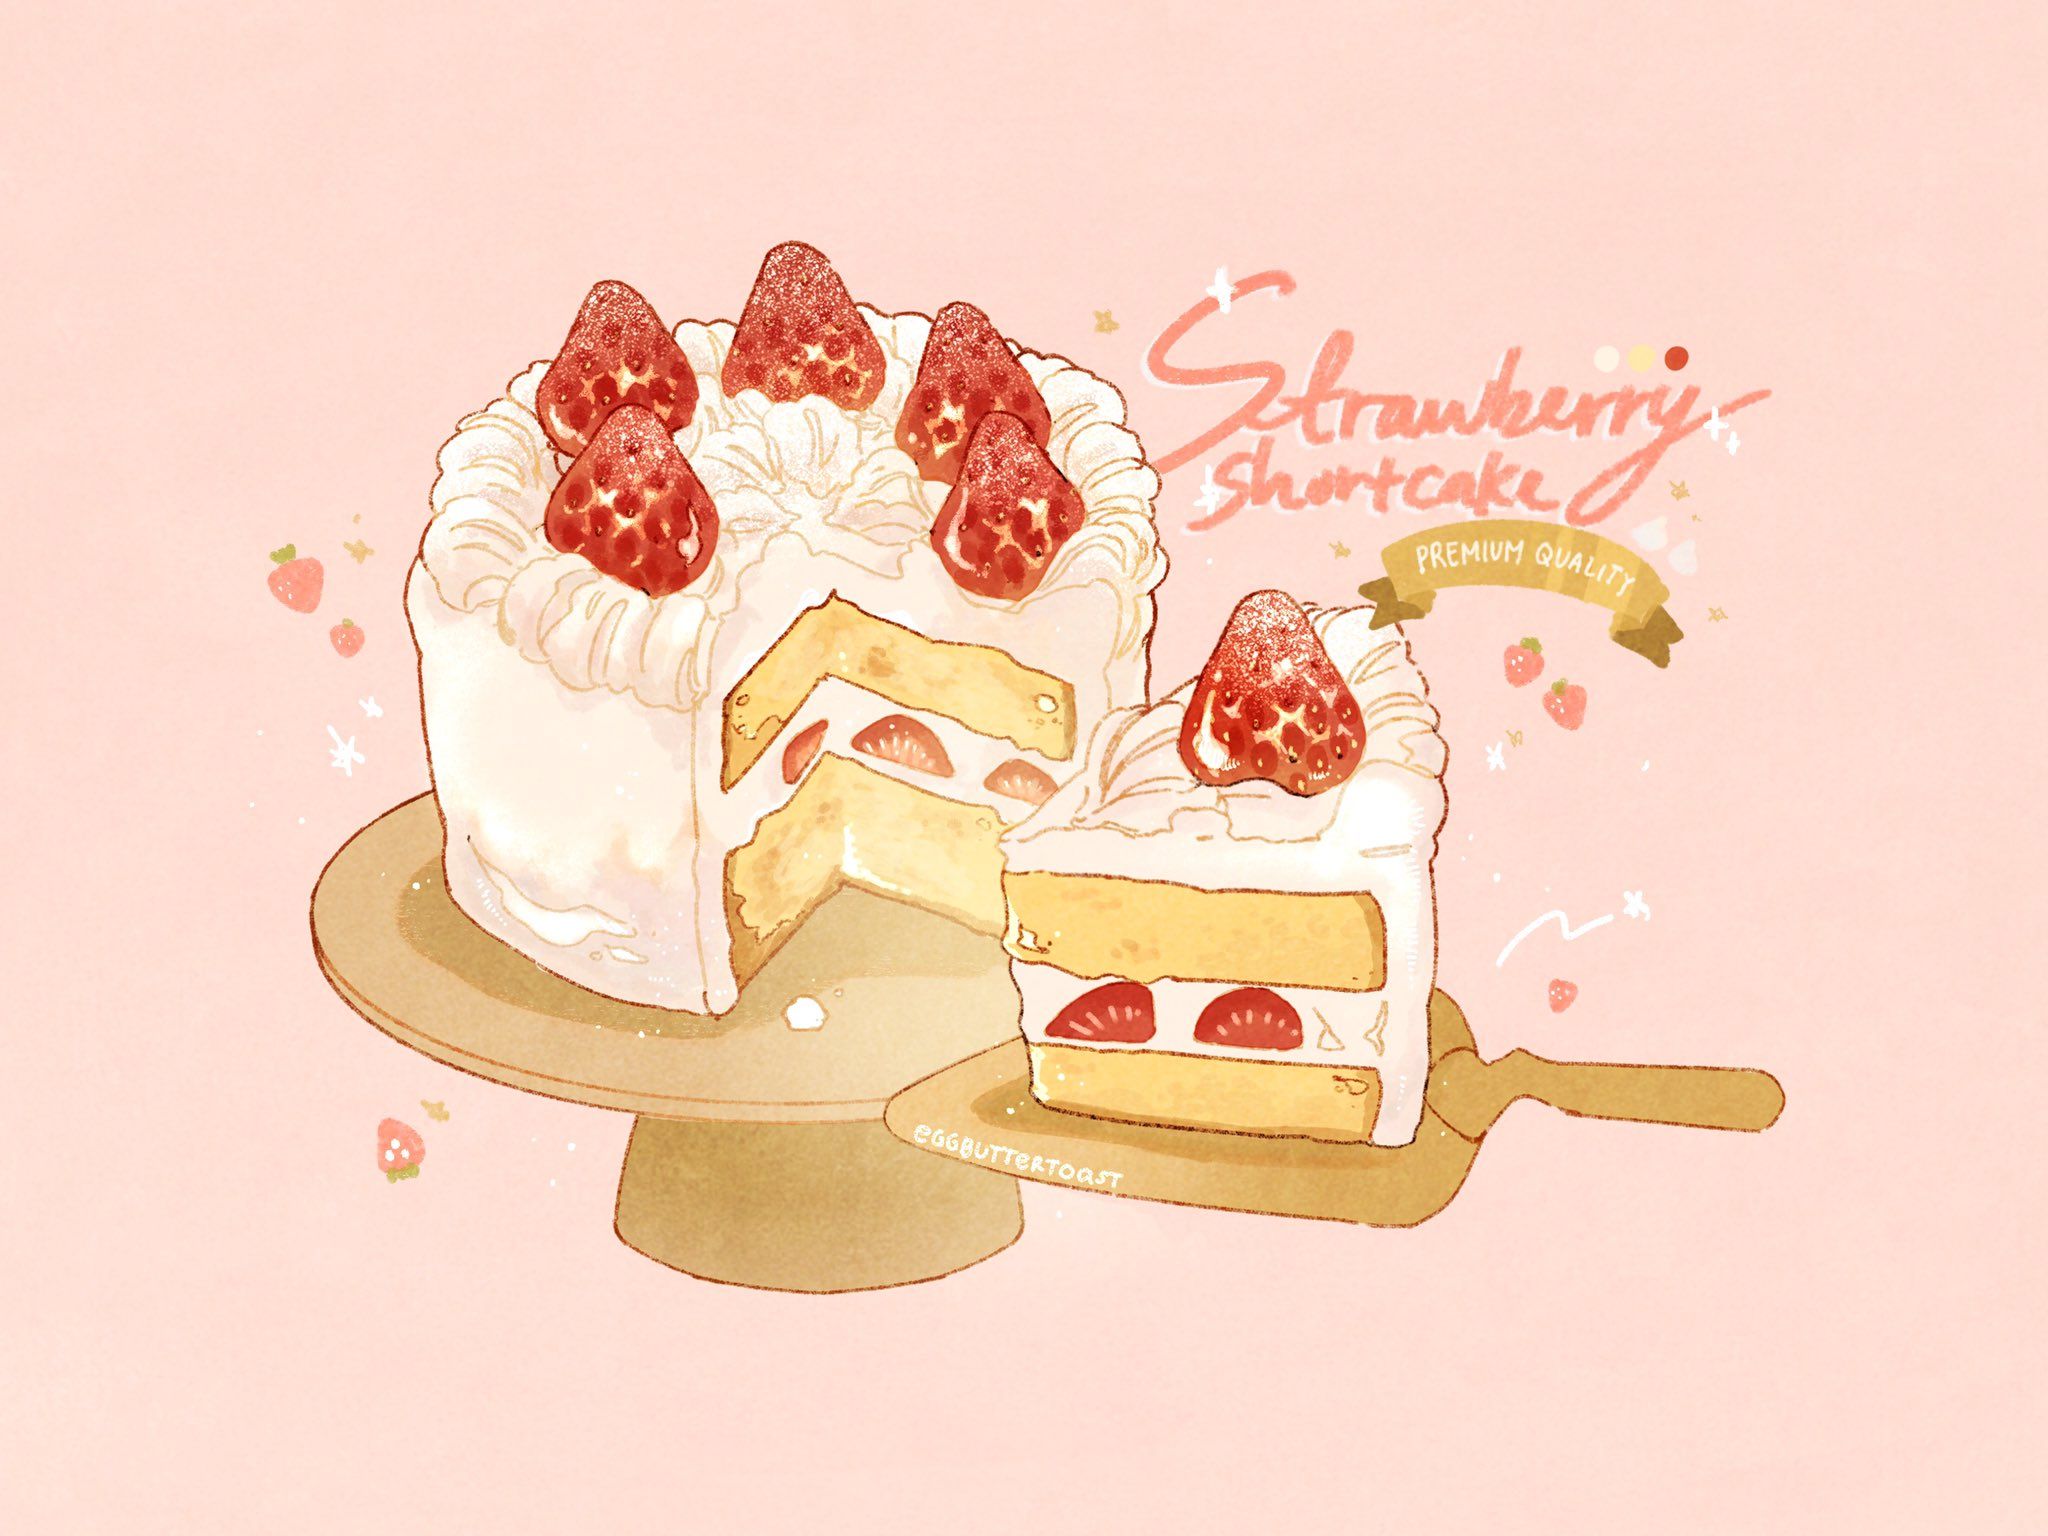 Cute cartoon strawberry shortcake Royalty Free Vector Image